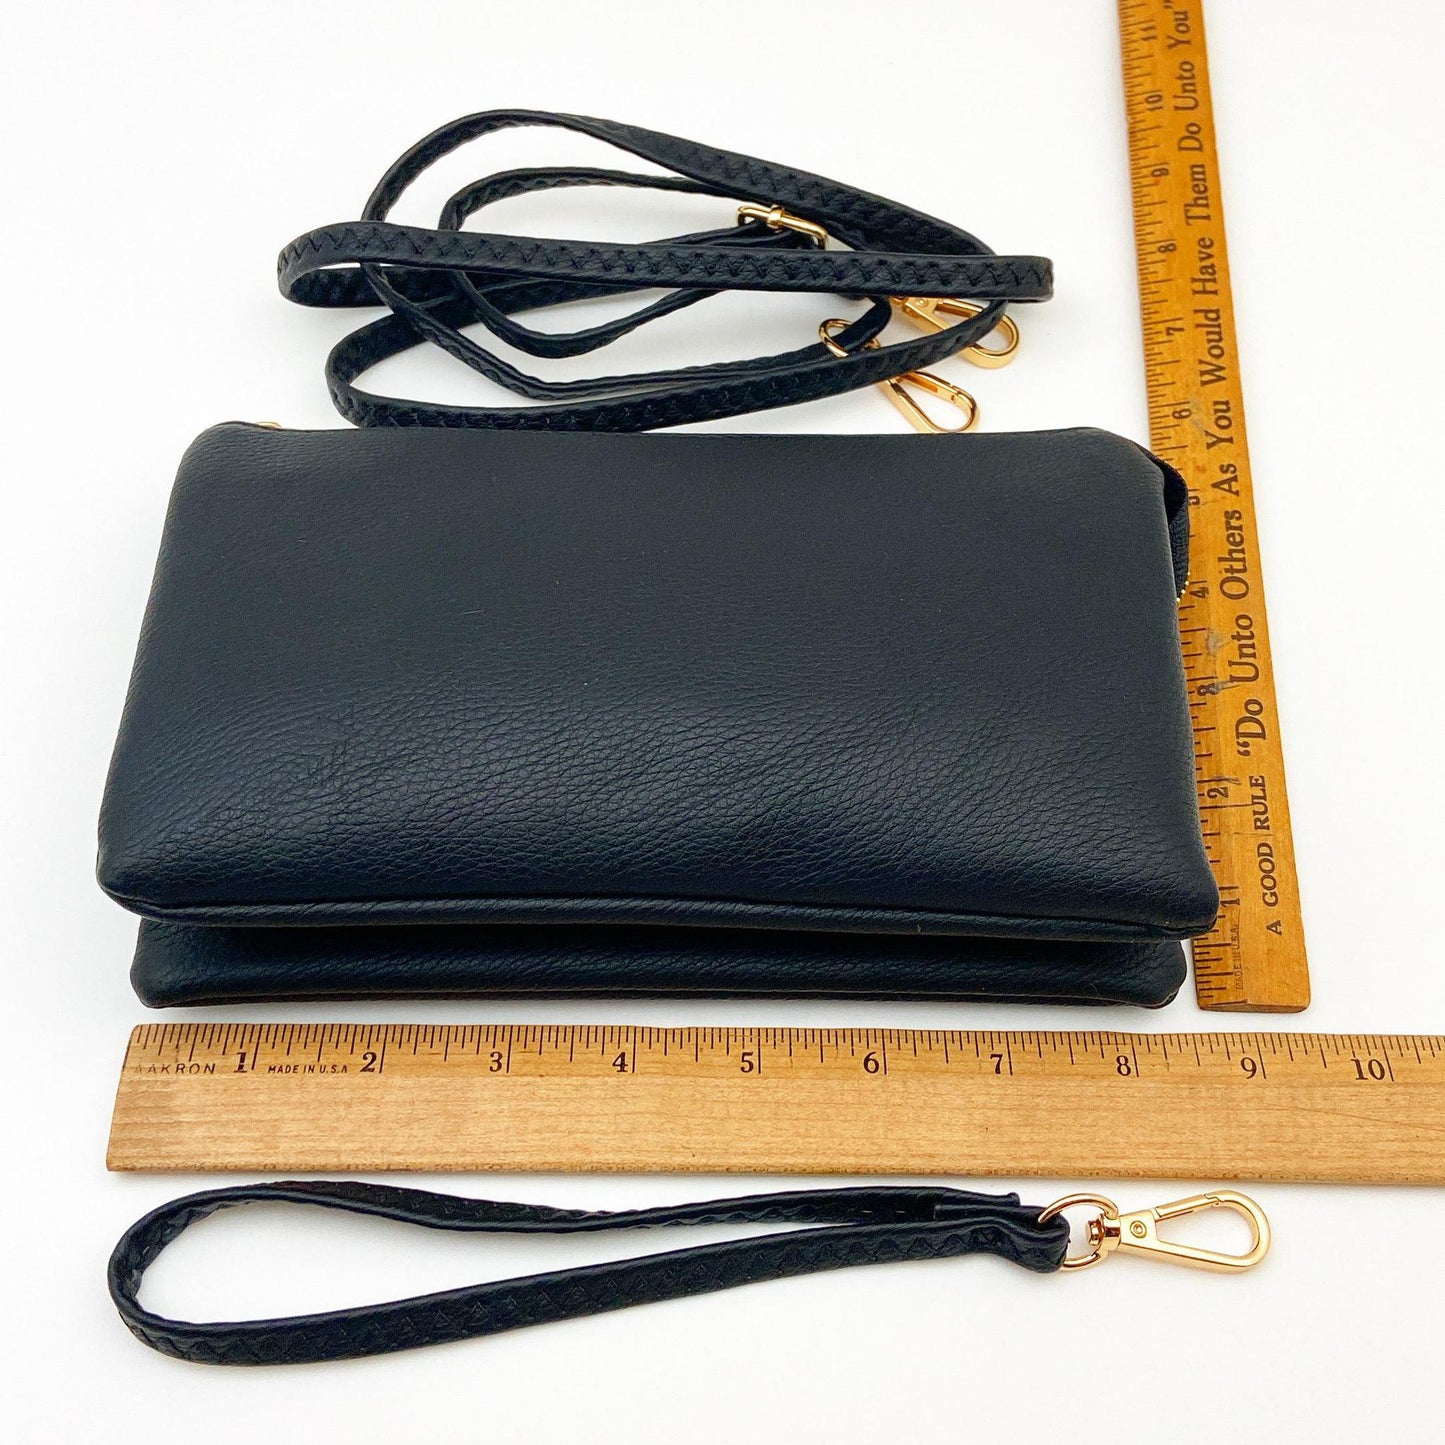 4 in 1 Handbag - Crossbody/Clutch/Wristlet - Black